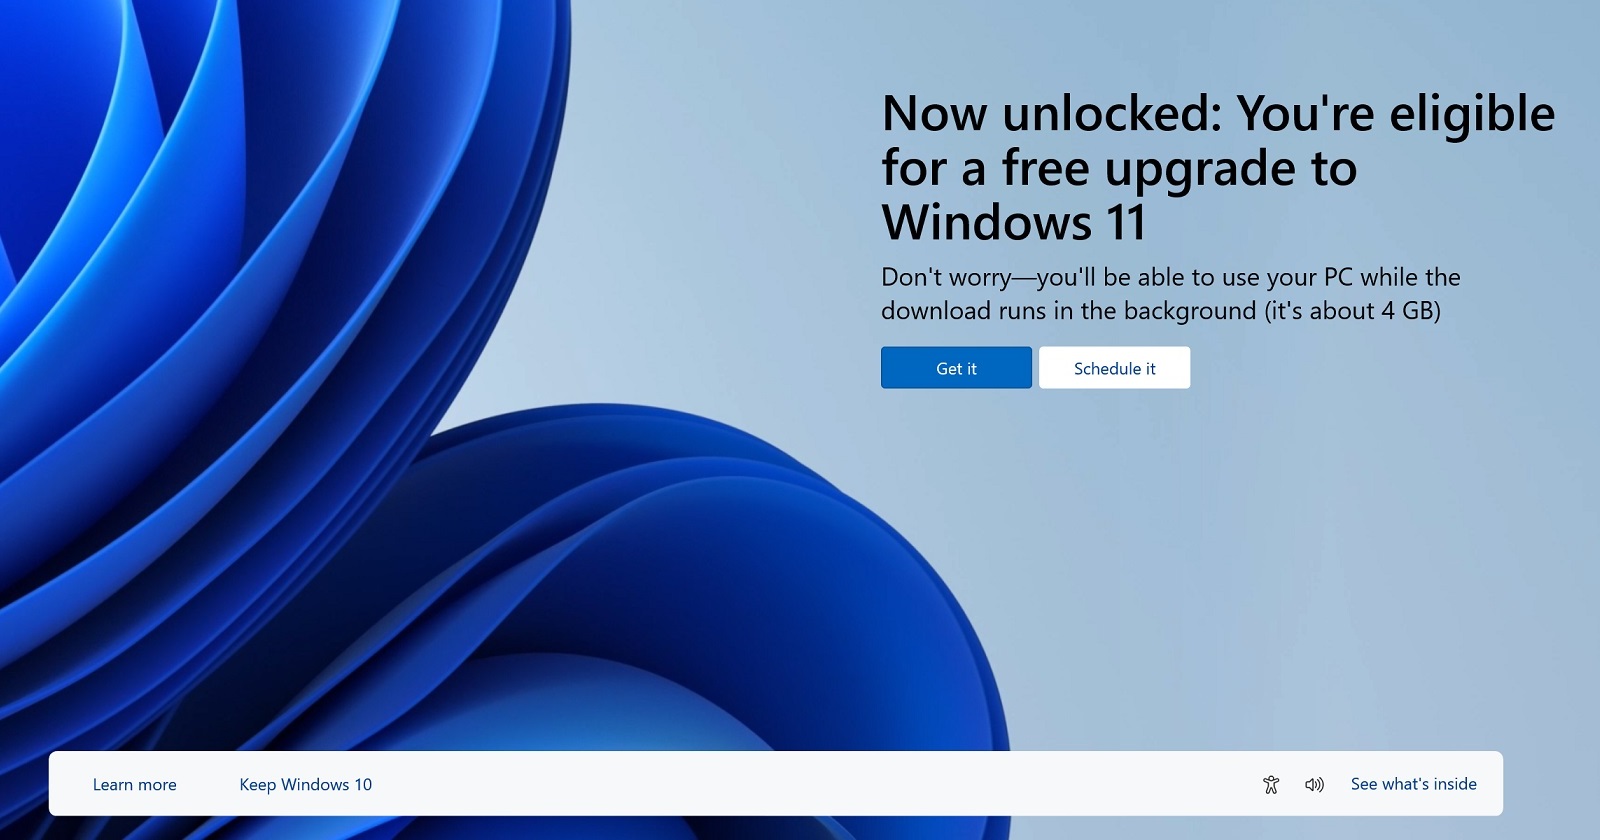 Windows 11 free upgrade offer on Windows 10